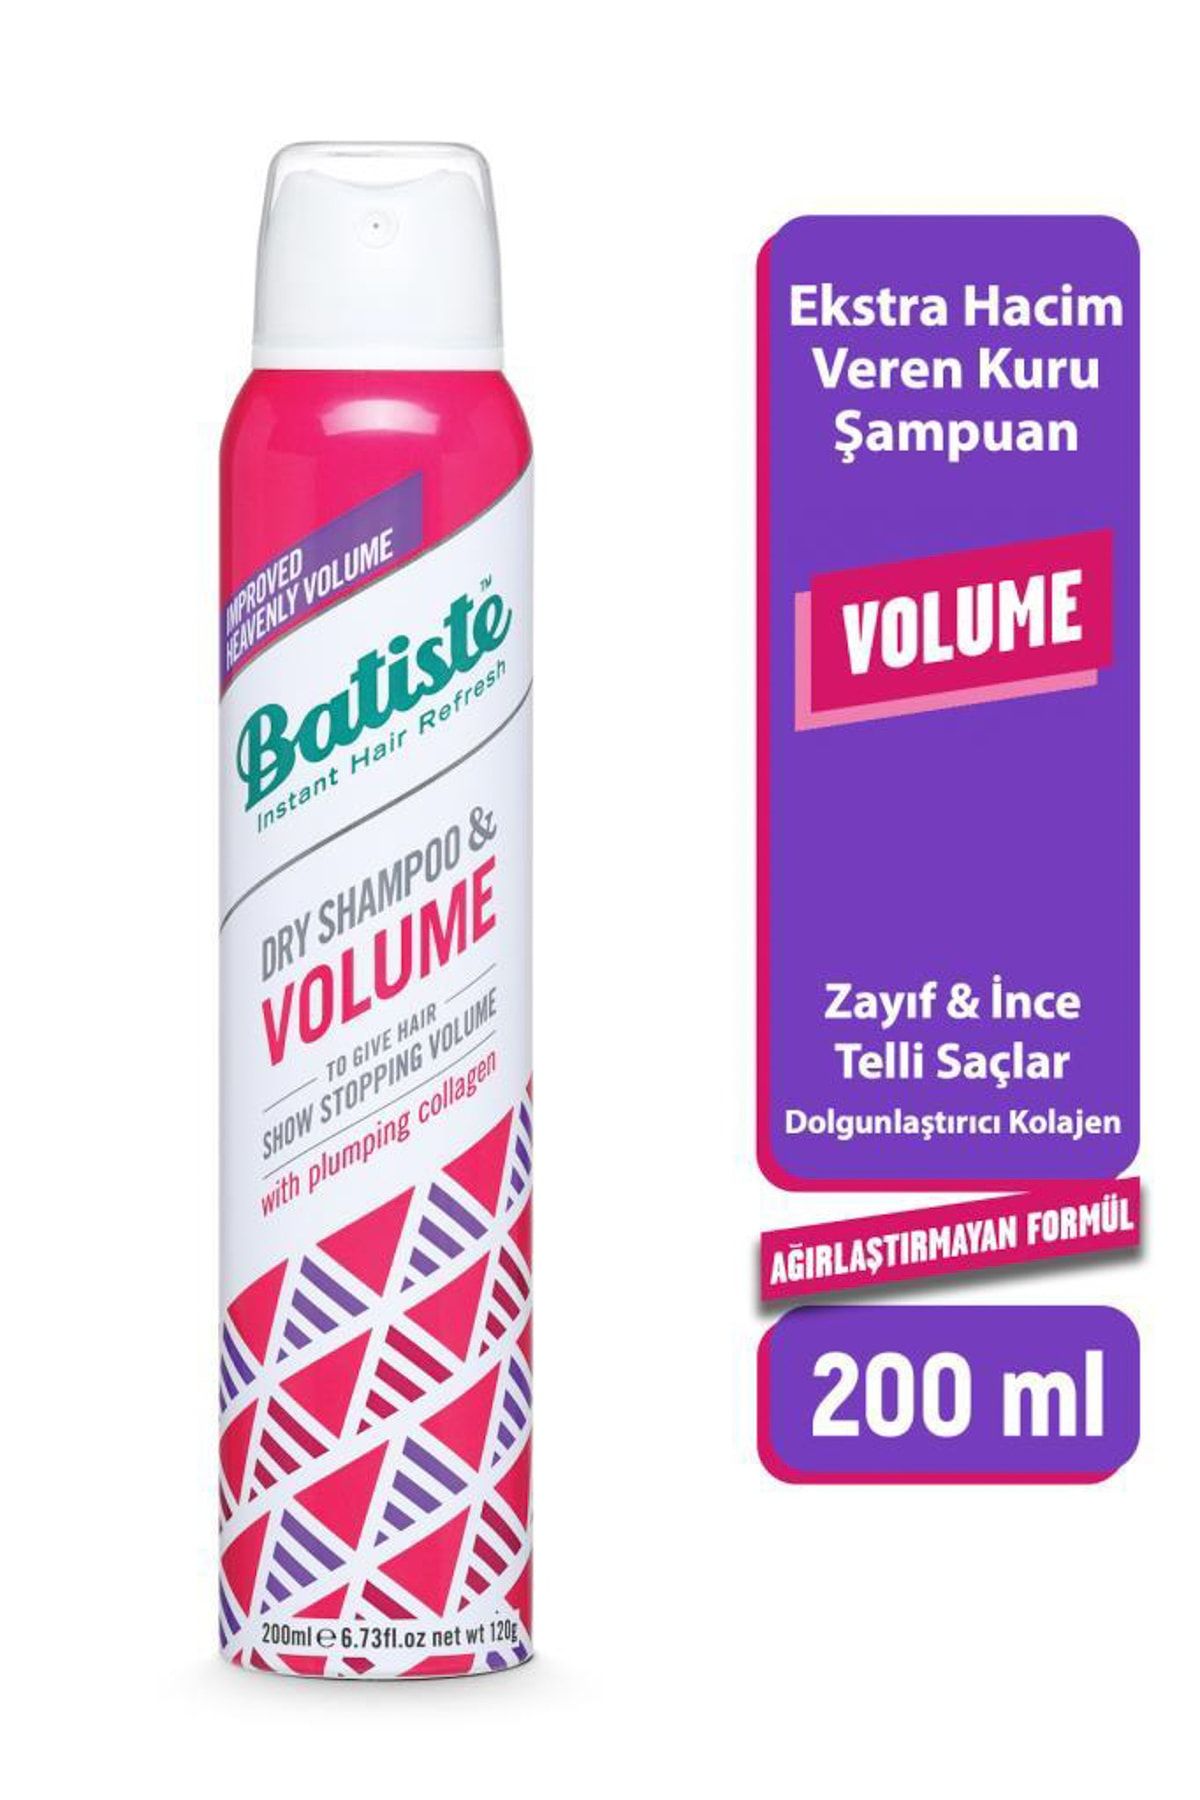 Batiste Ekstra Hacim Veren Kuru Şampuan- Hair Benefits Volume Dry Shampoo 200 ml